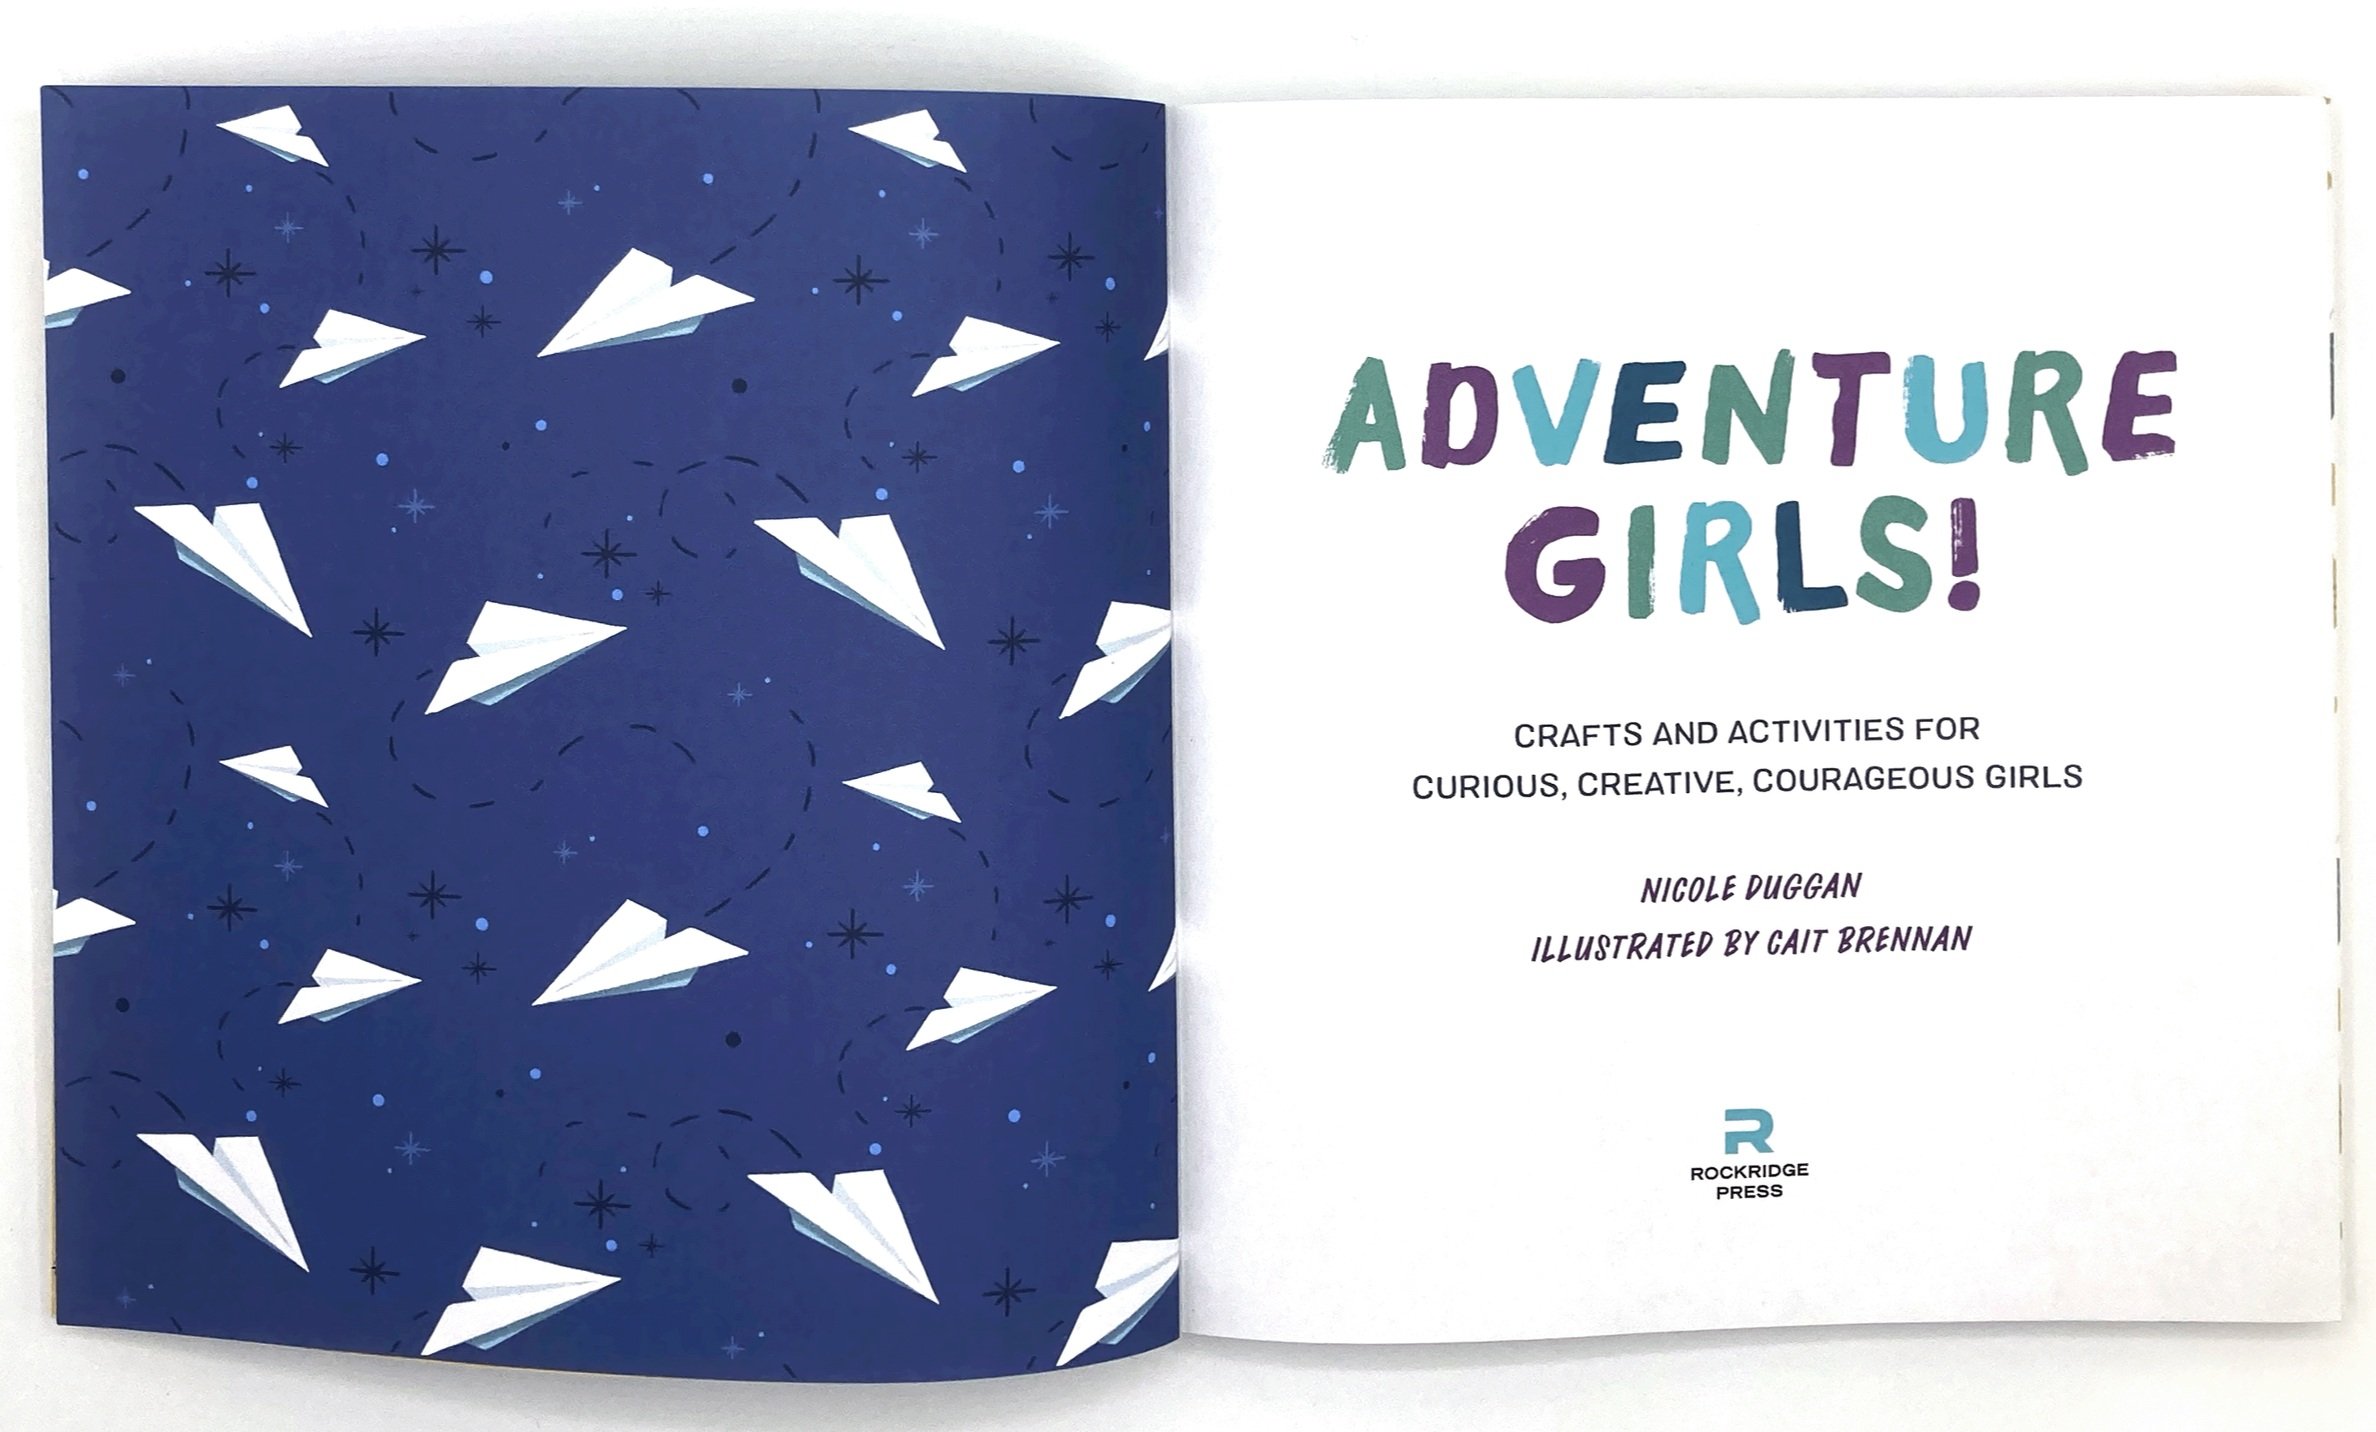 Adventure Girls — Cait Brennan Illustration